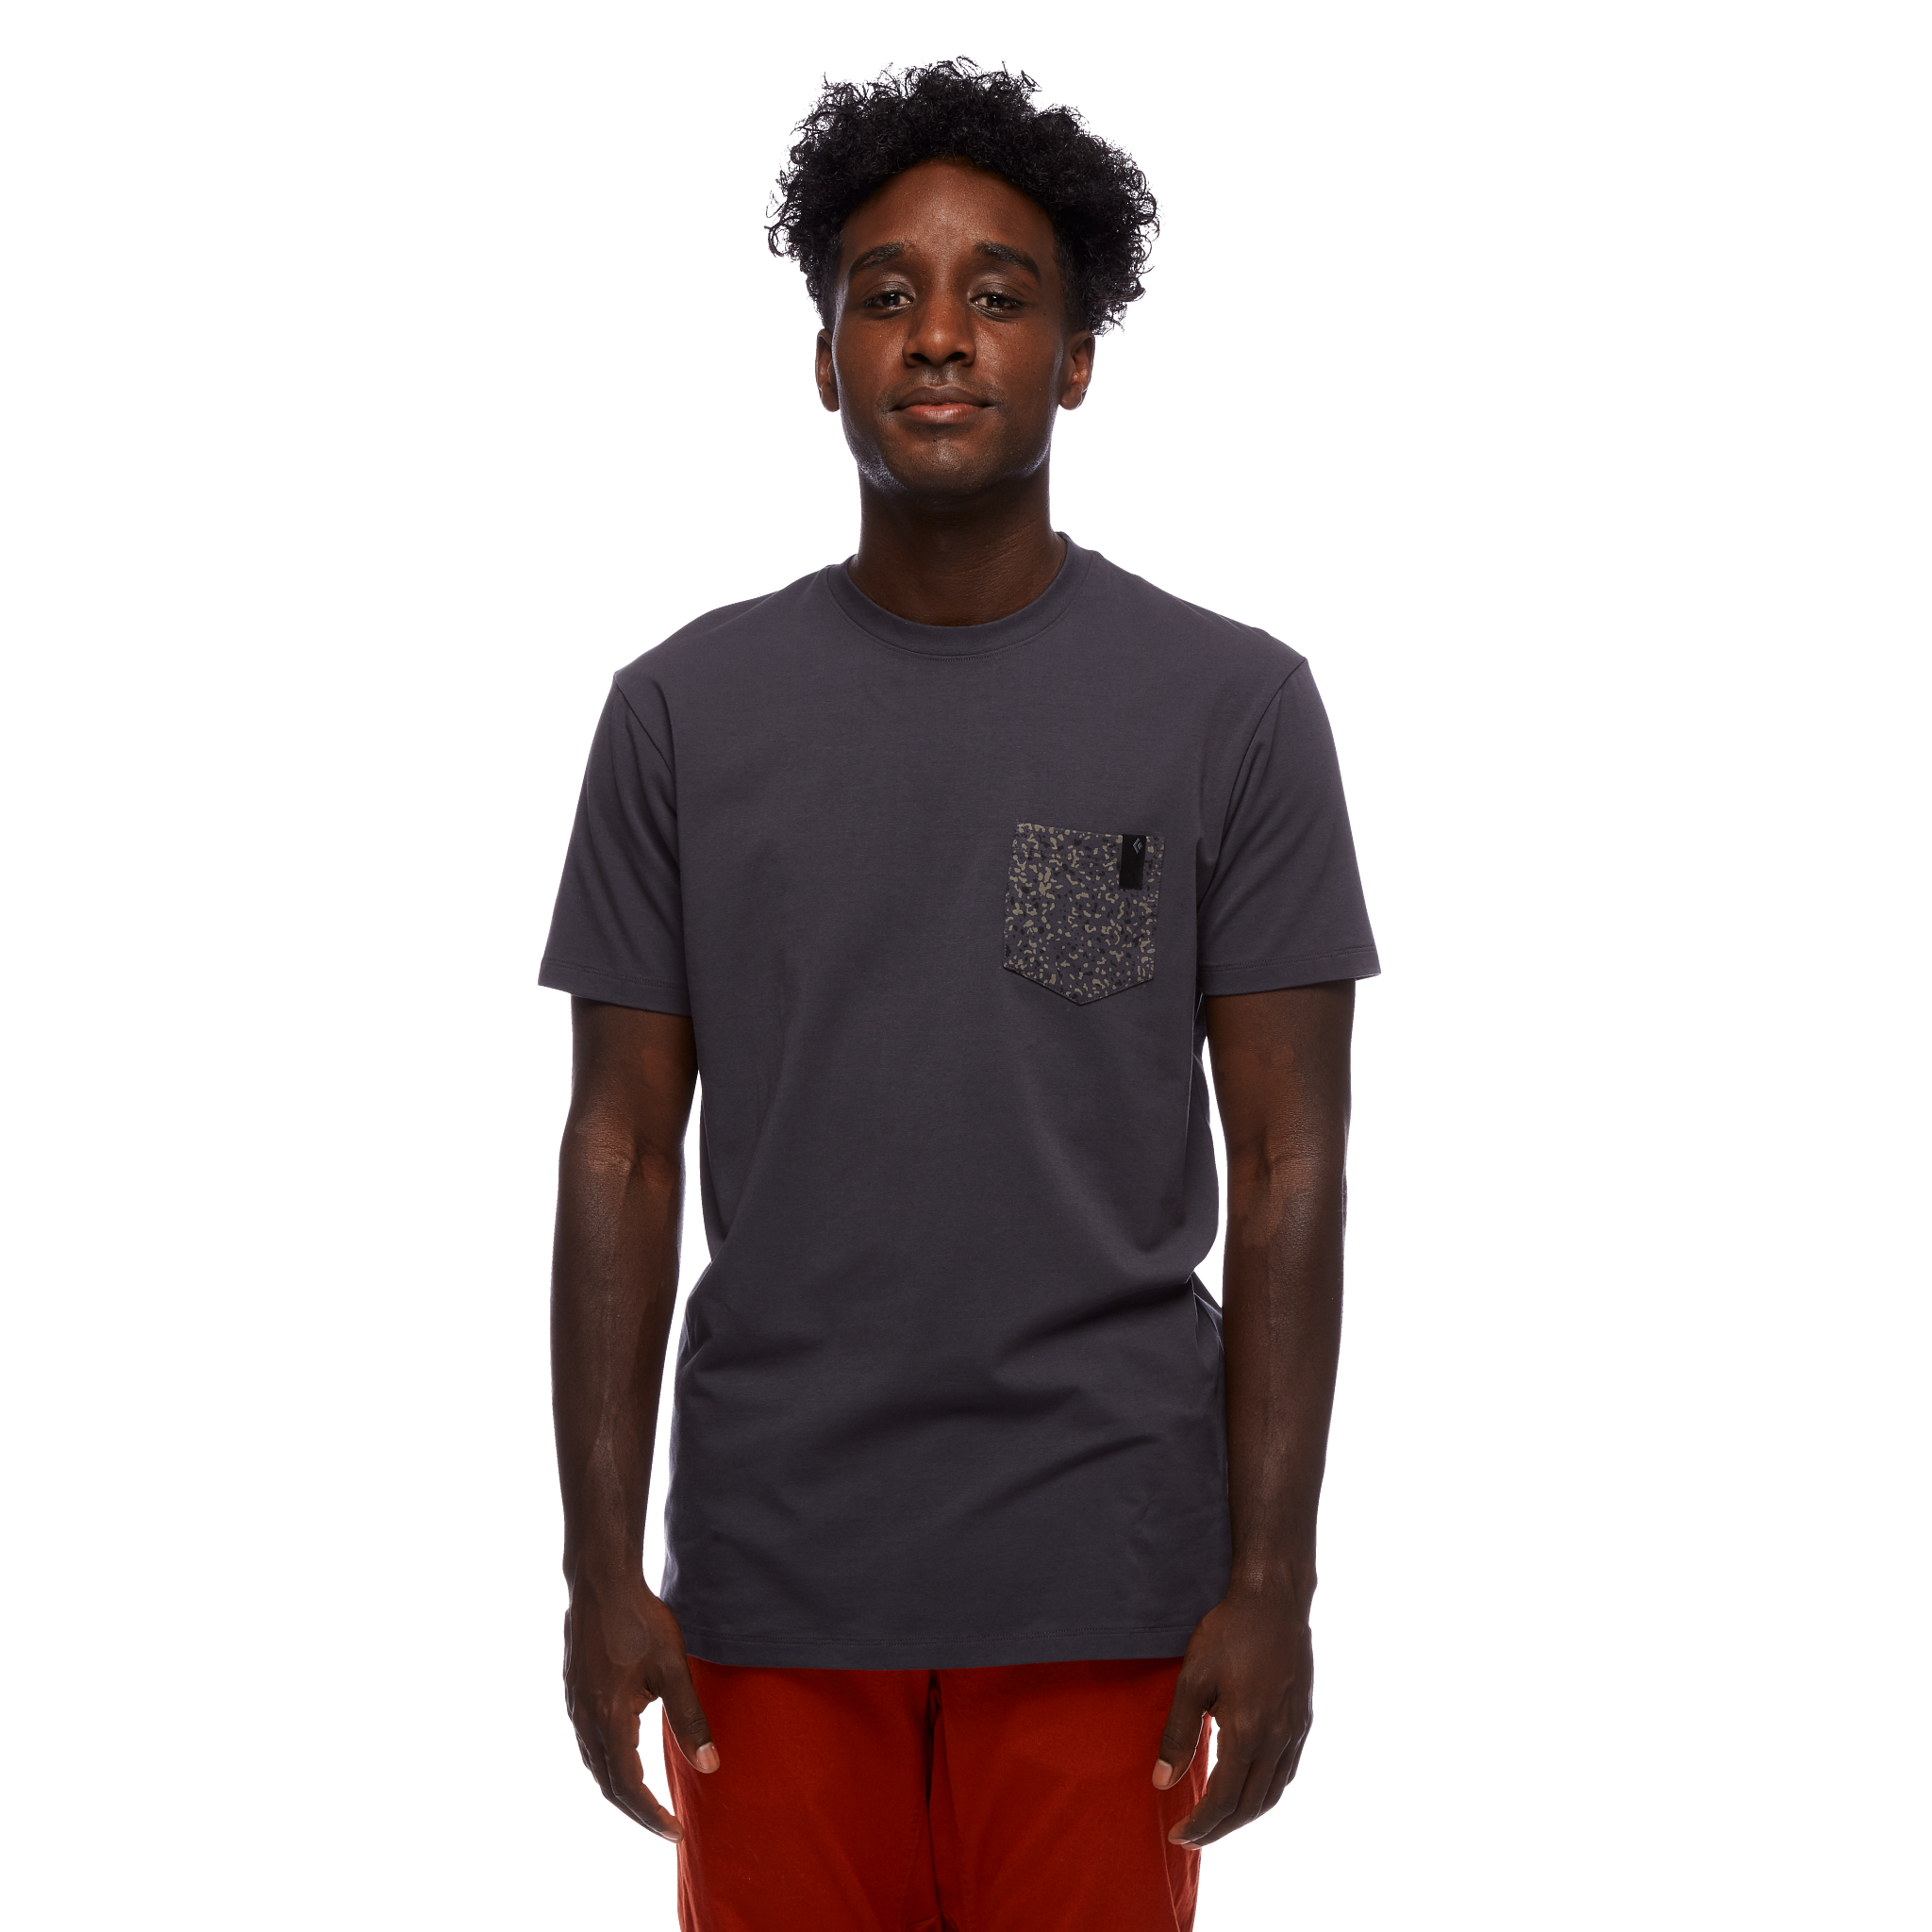 Black Diamond Equipment Men's Pocket Square T-Shirt, Small Carbon Rock Texture Print